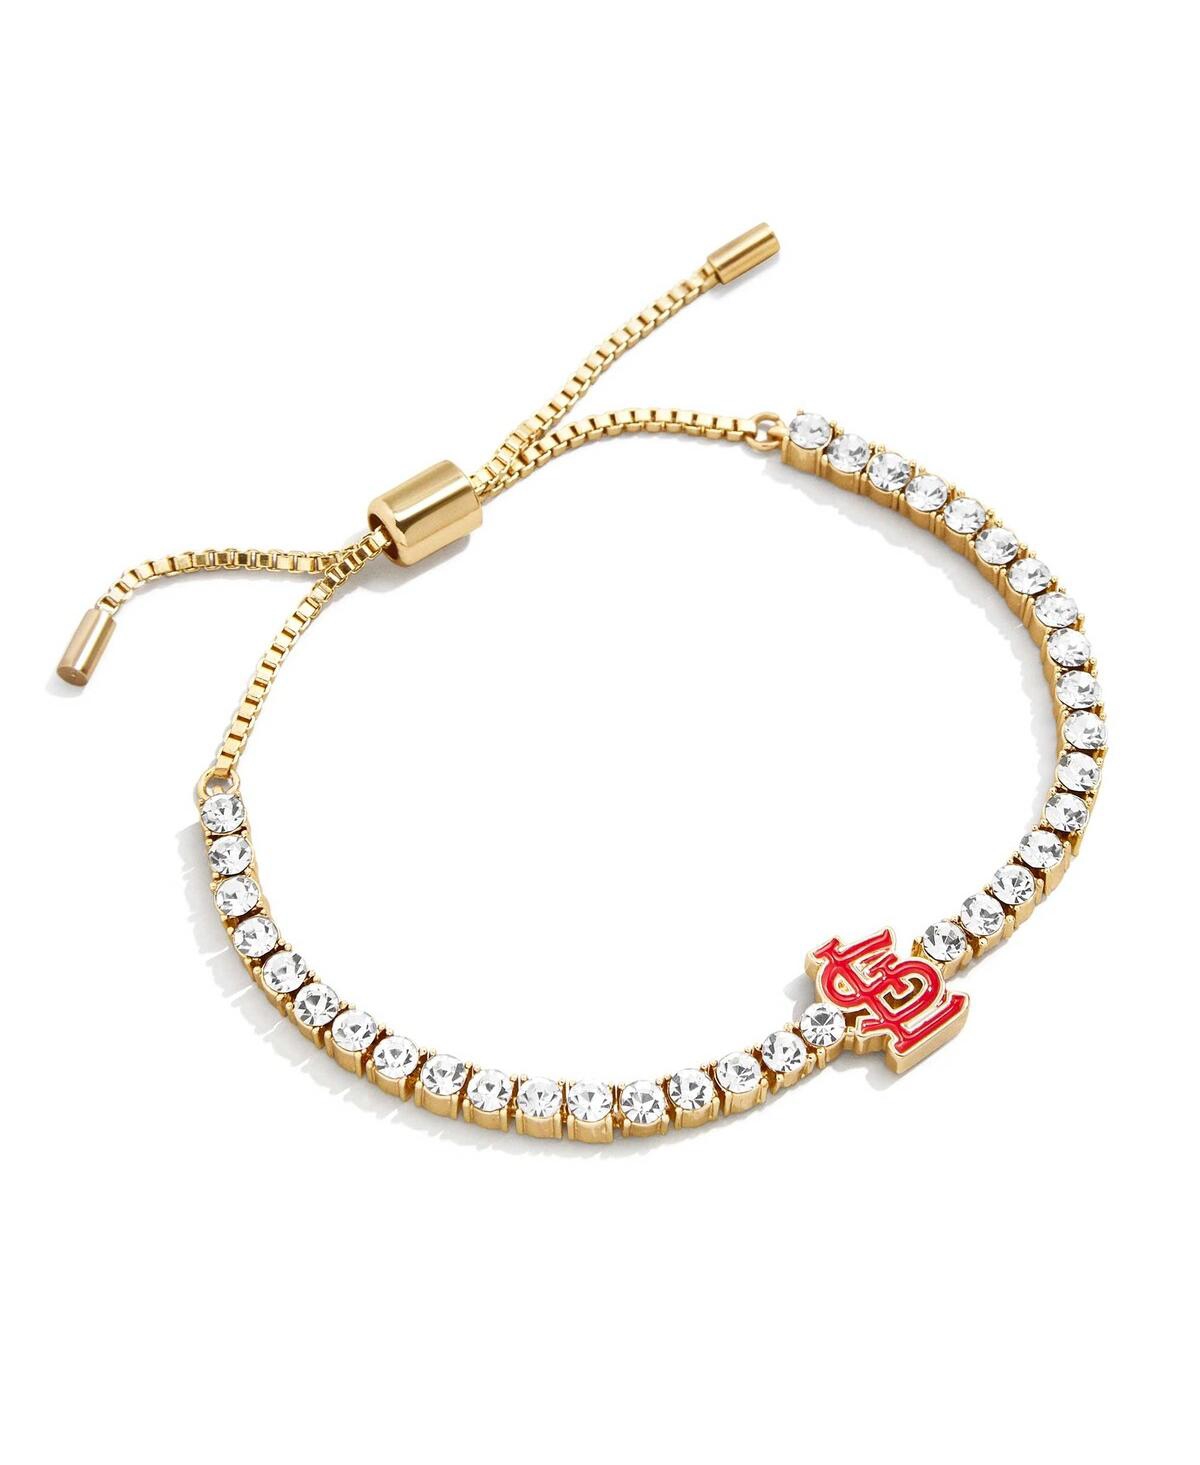 Baublebar Women's  St. Louis Cardinals Pull-tie Tennis Bracelet In Gold-tone